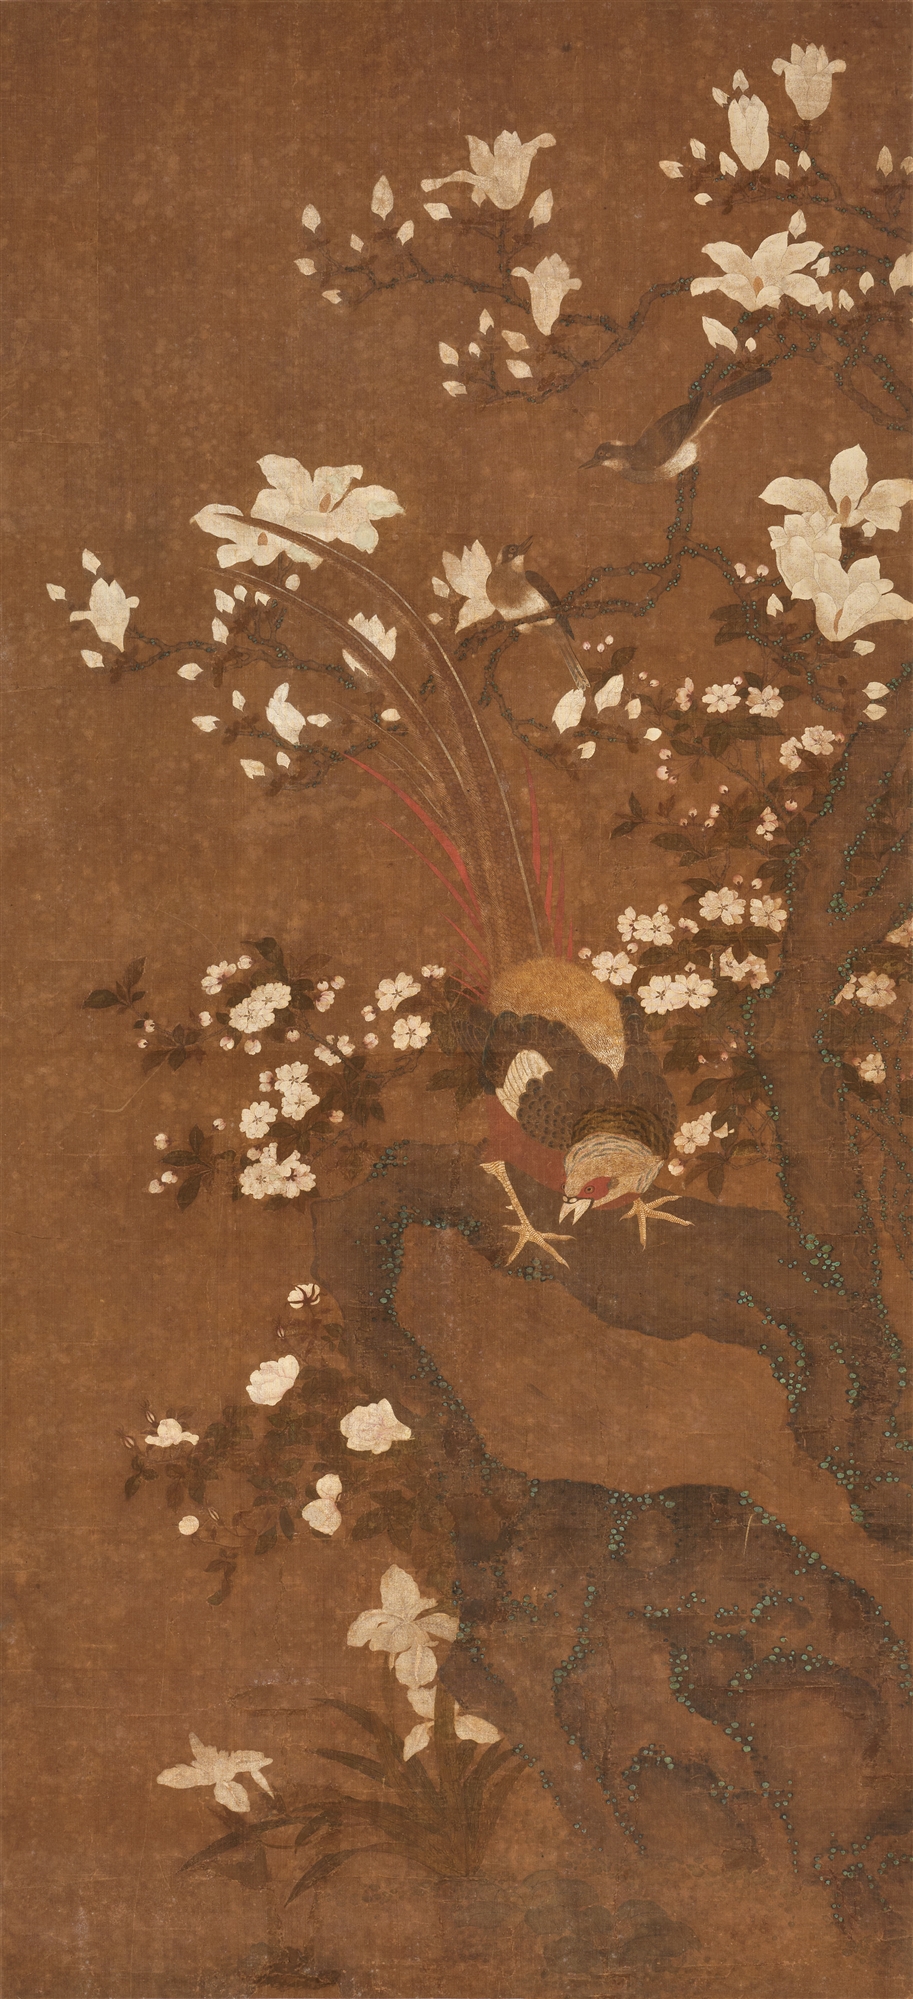 A pheasant in a magnolia tree